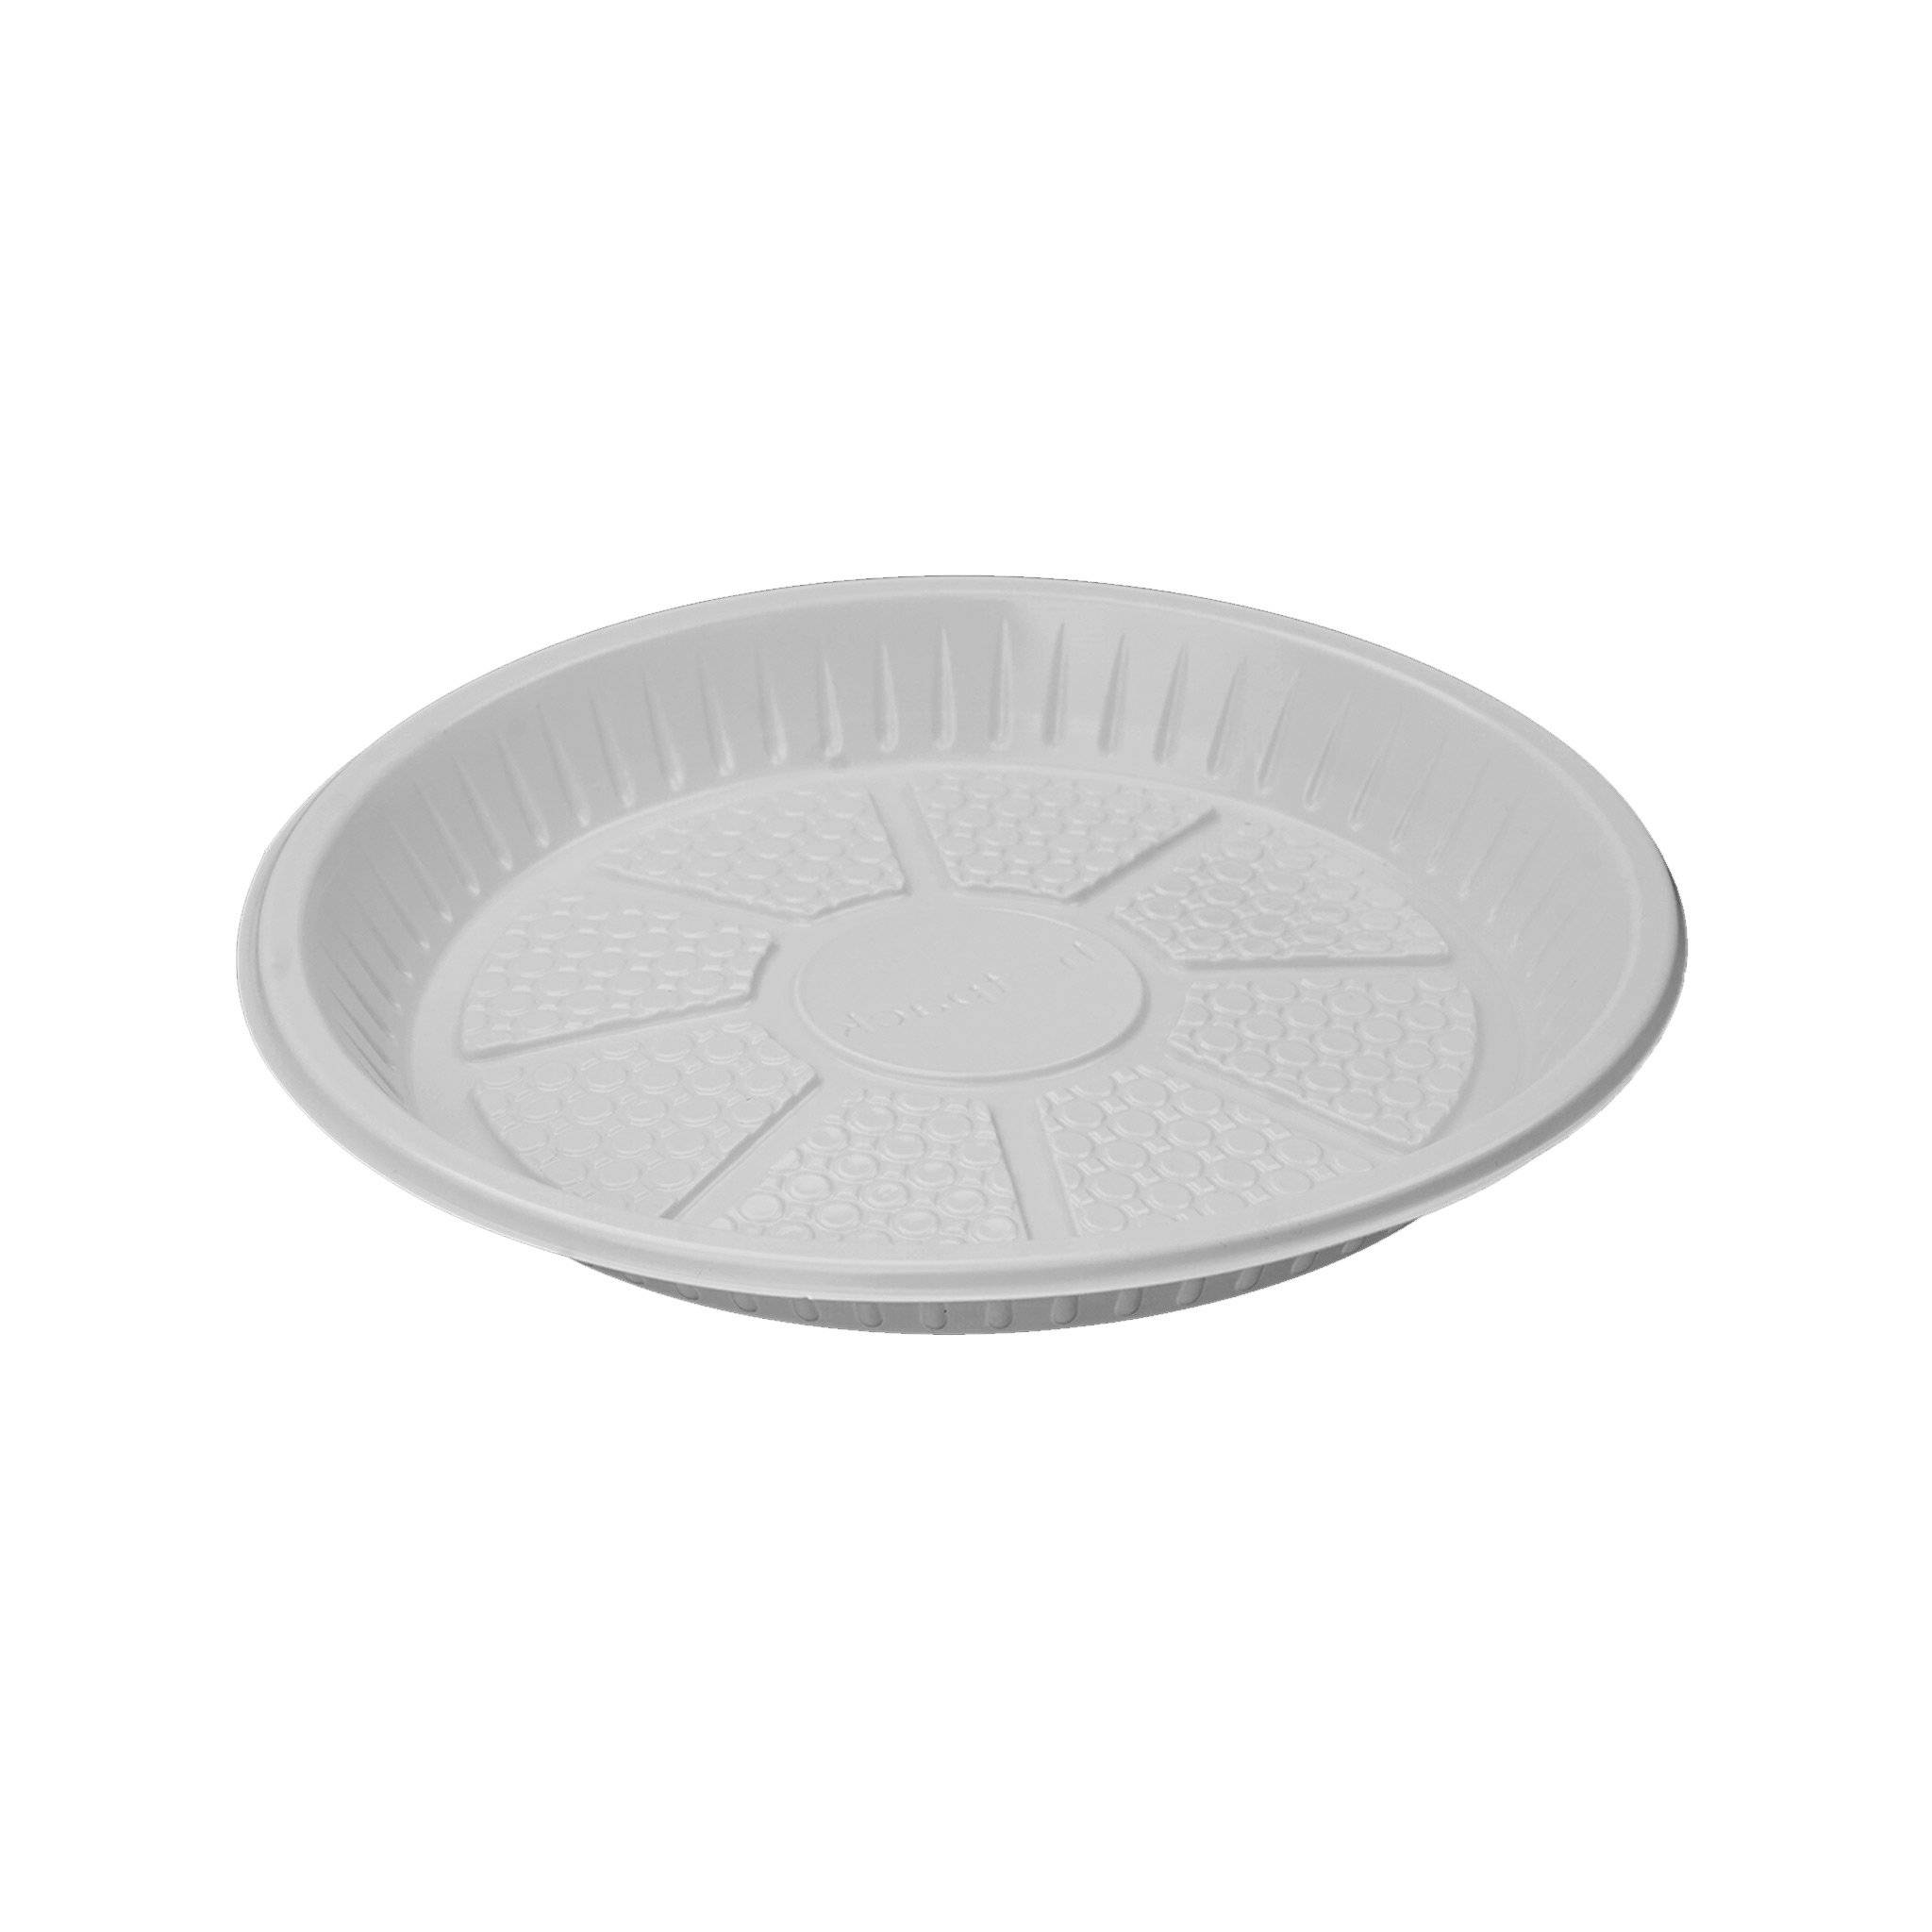  Round Plastic Plate White